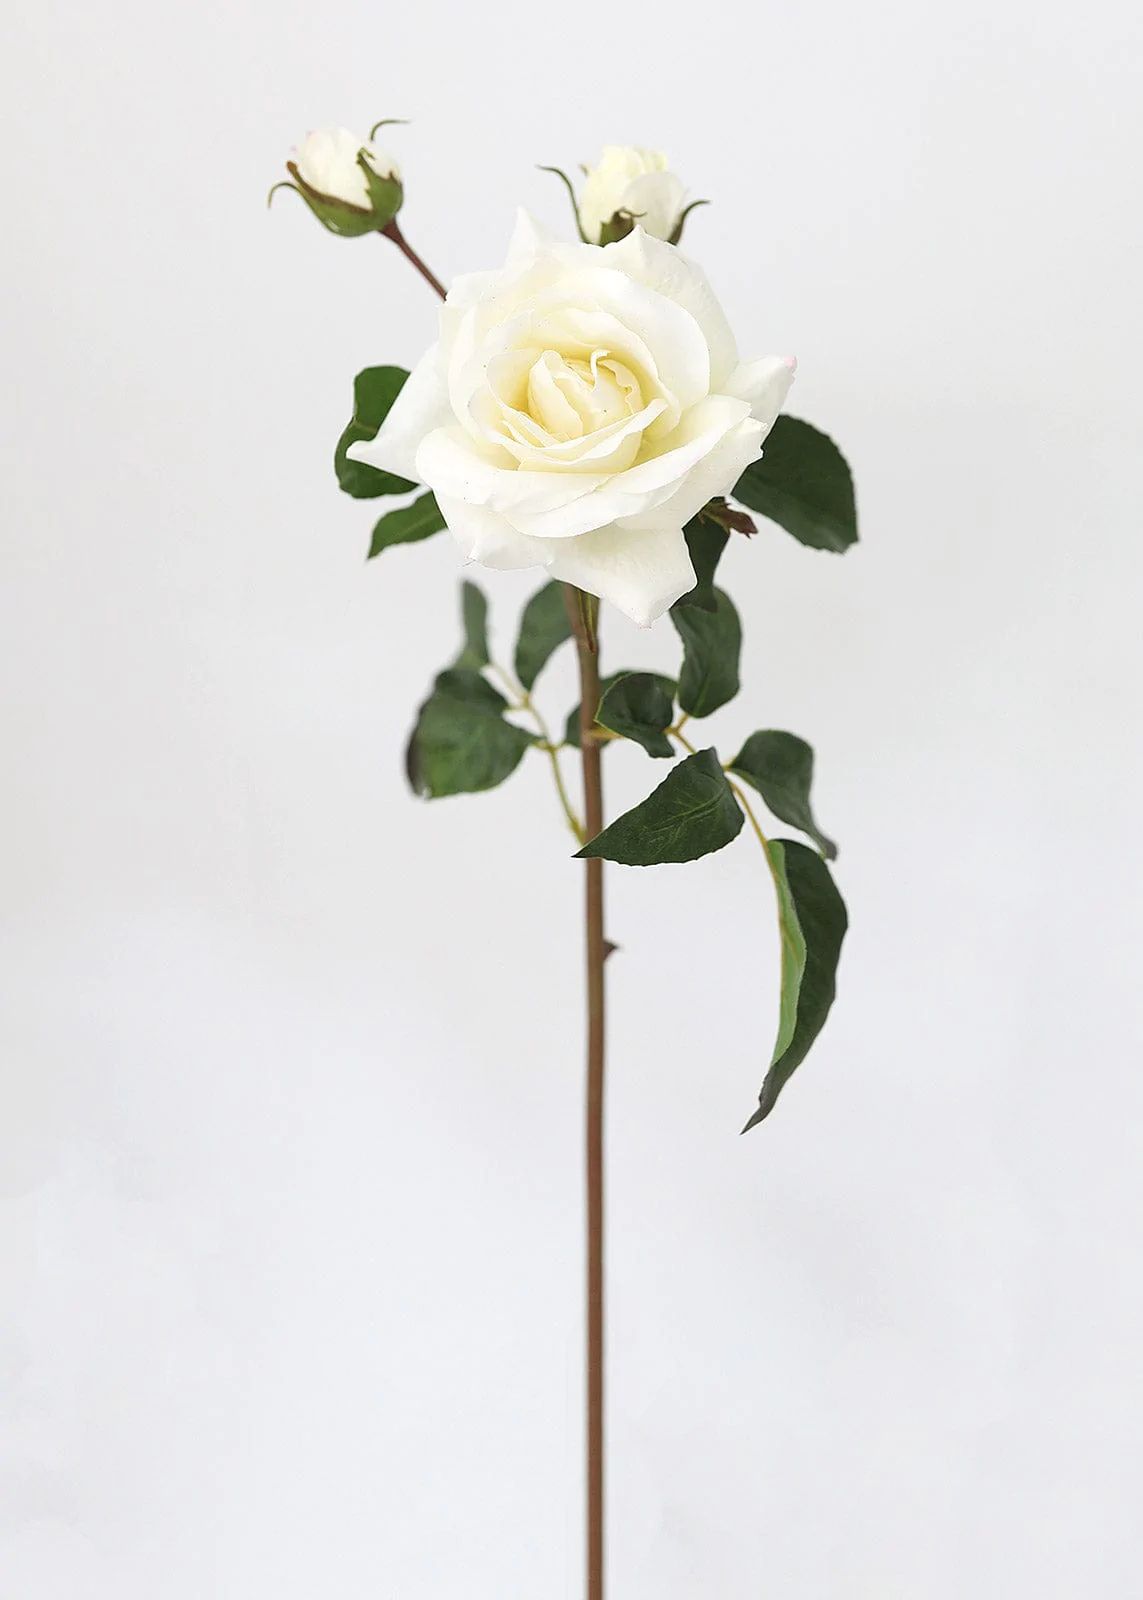 Faux English Sweet Juliet Rose | Unique Fake Roses at Afloral.com | Afloral